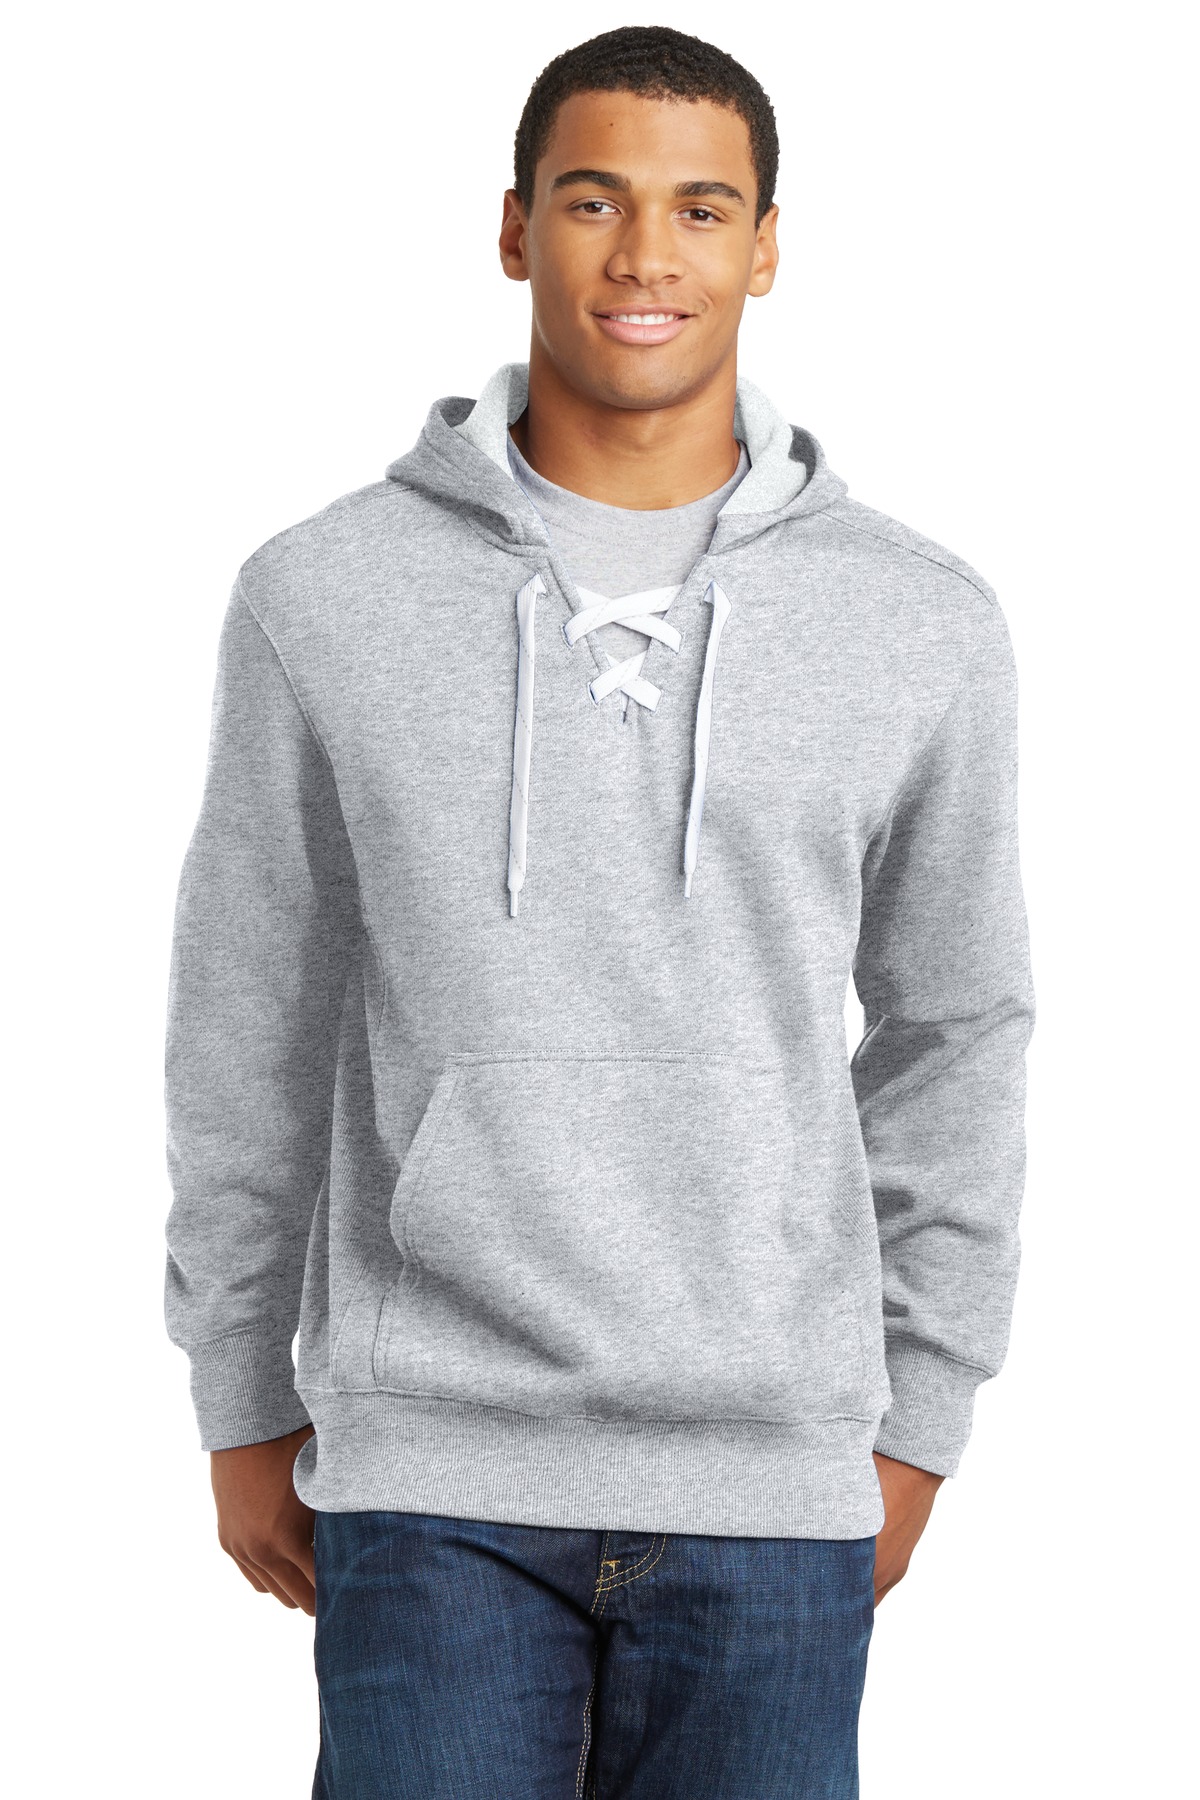 Sport-Tek Lace Up Pullover Hooded Sweatshirt - ST271